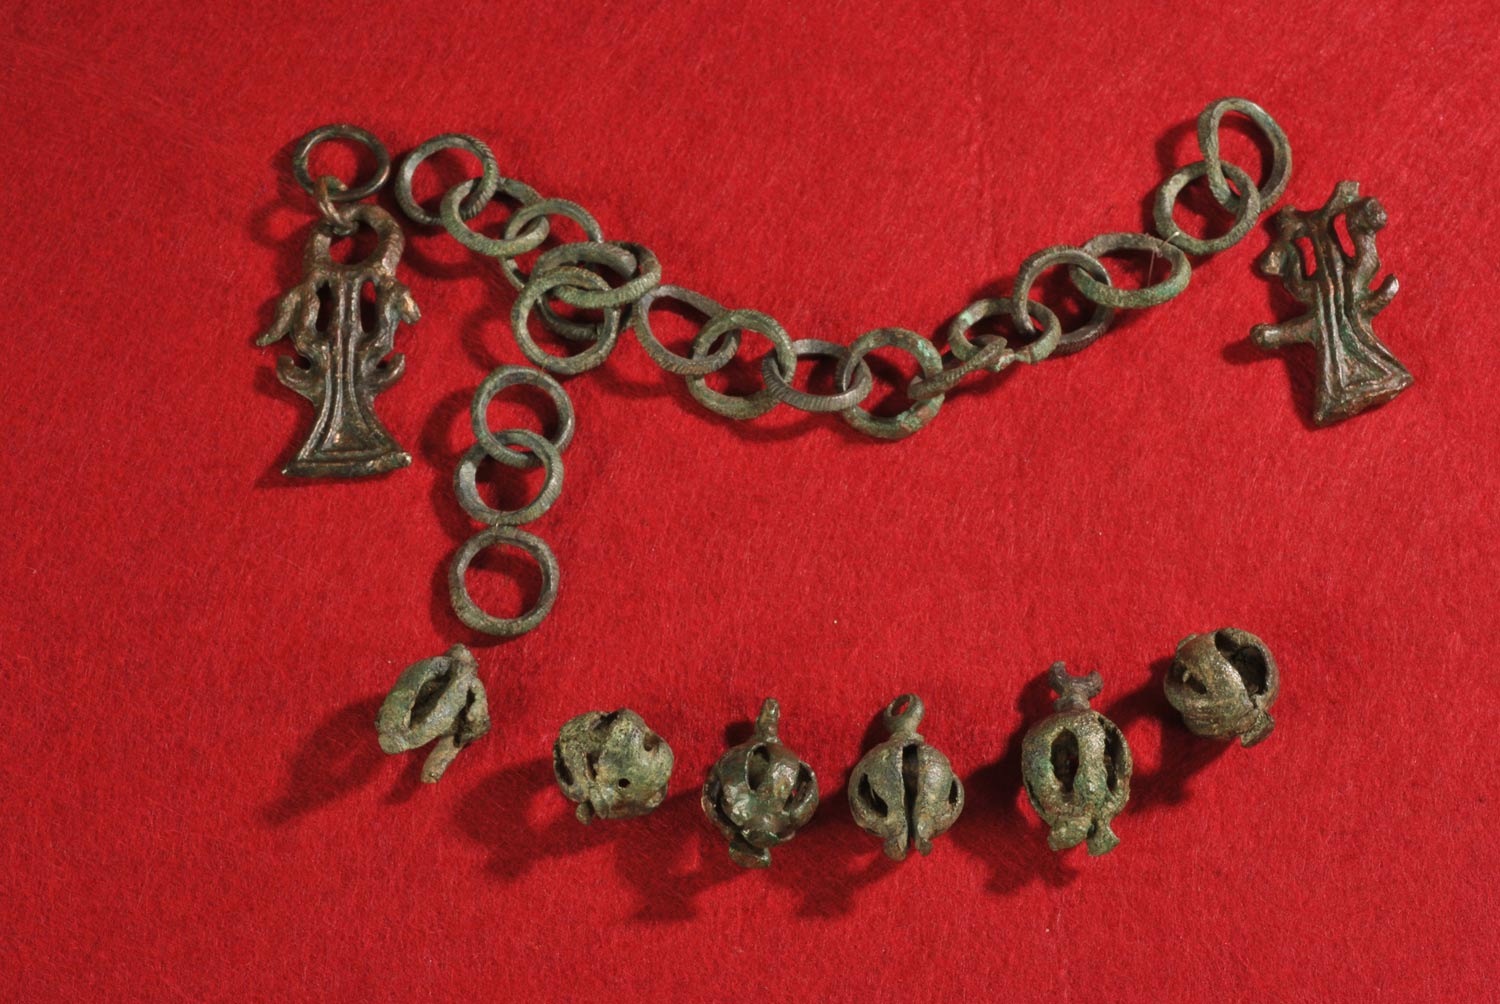 Ornithomorphic (bird-shaped) double protome pendant, with triangular termination, from tomb 5A, Chiavari, Corso Millo, Iron Age necropolis excavation (bronze, length 6 cm; Chiavari, National Archaeological Museum)